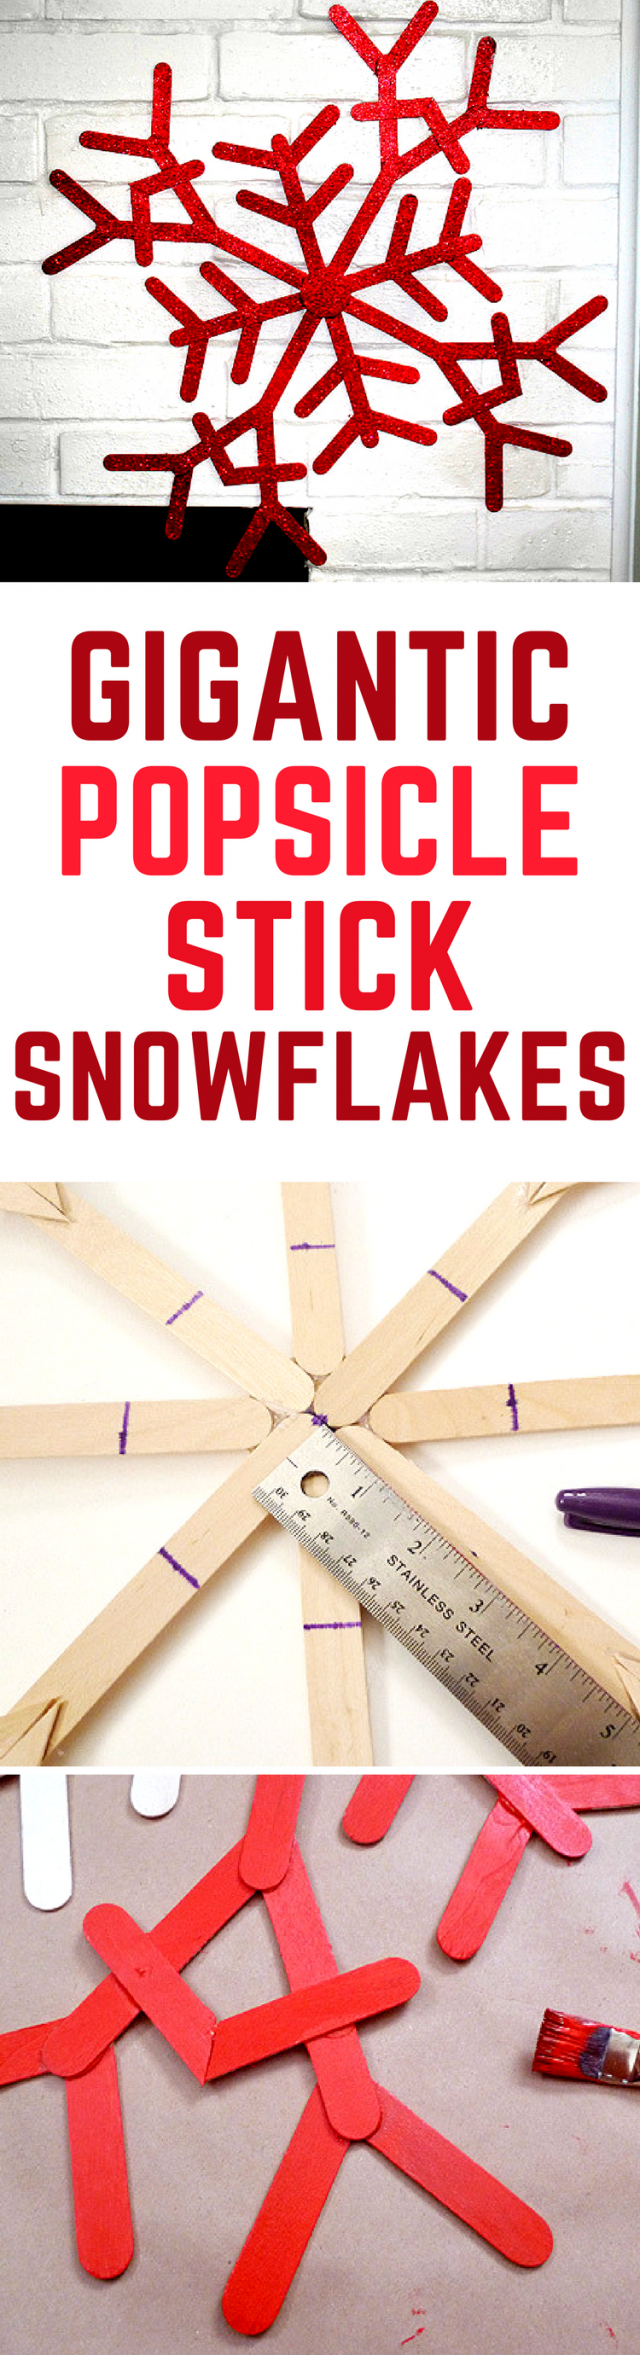 DIY Gigantic Popsicle Stick Snowflakes Craft